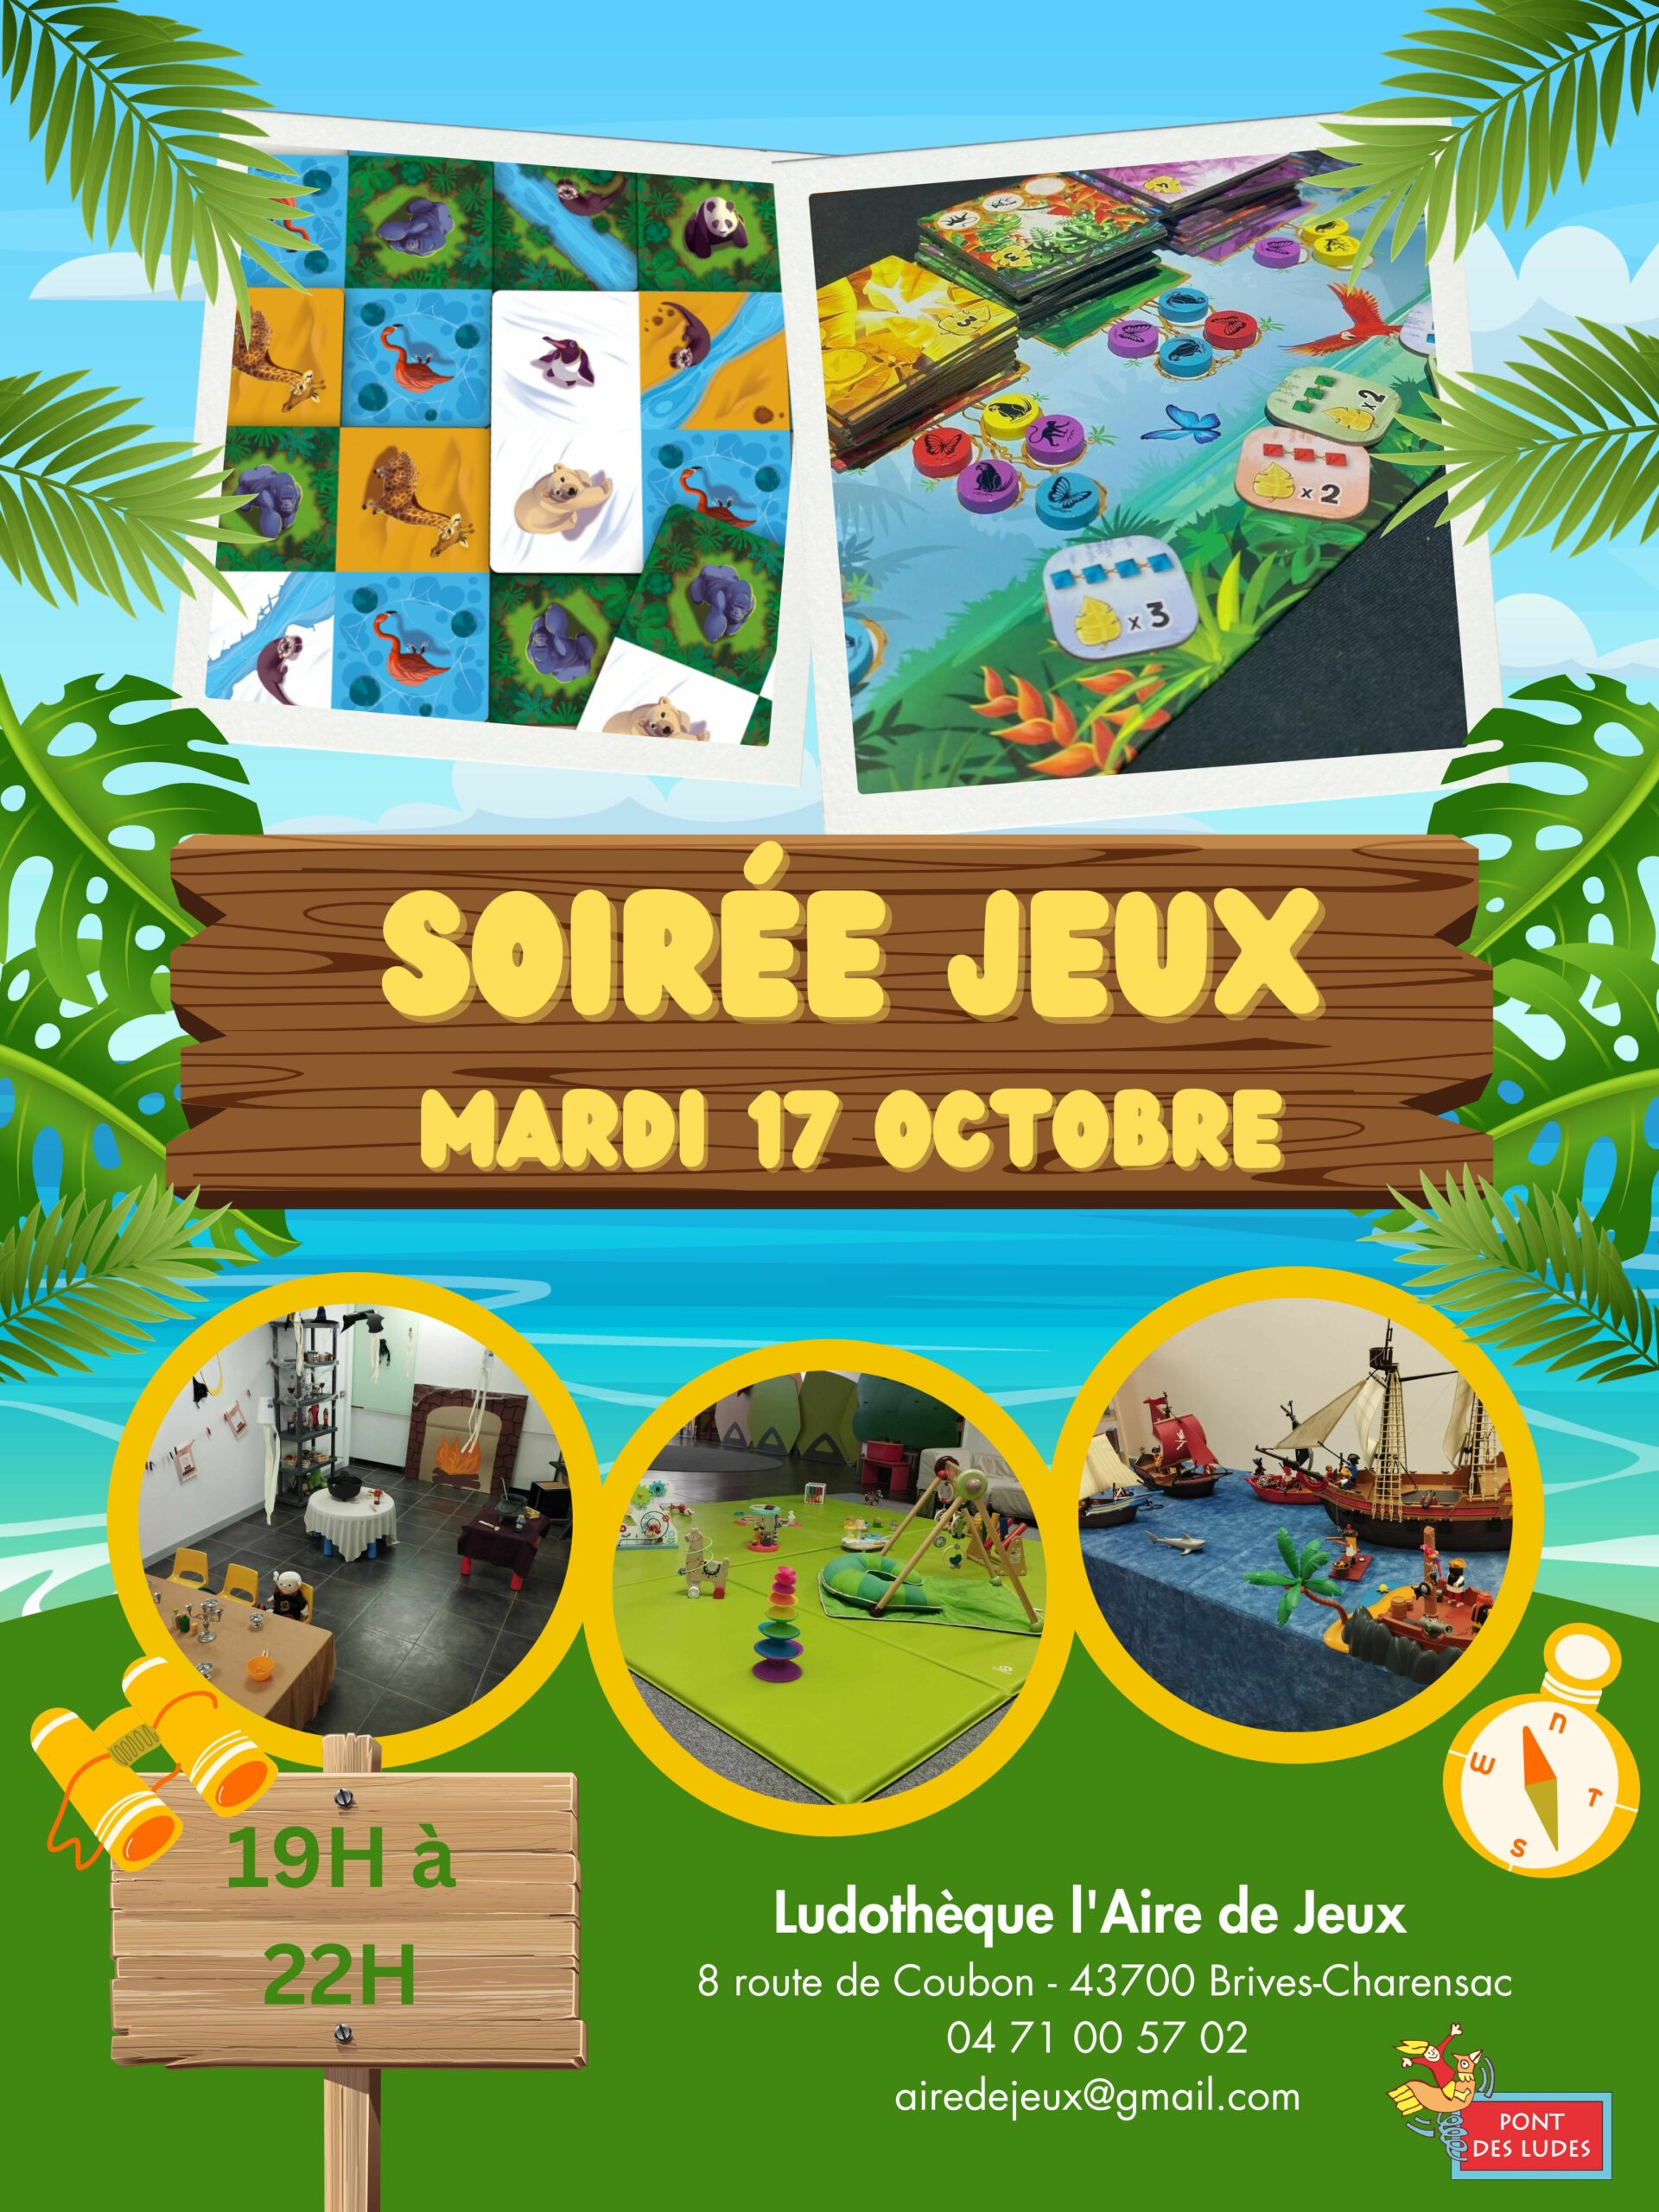 Soirée jeux Barjo (33) - samedi 30 septembre 2017 18:20